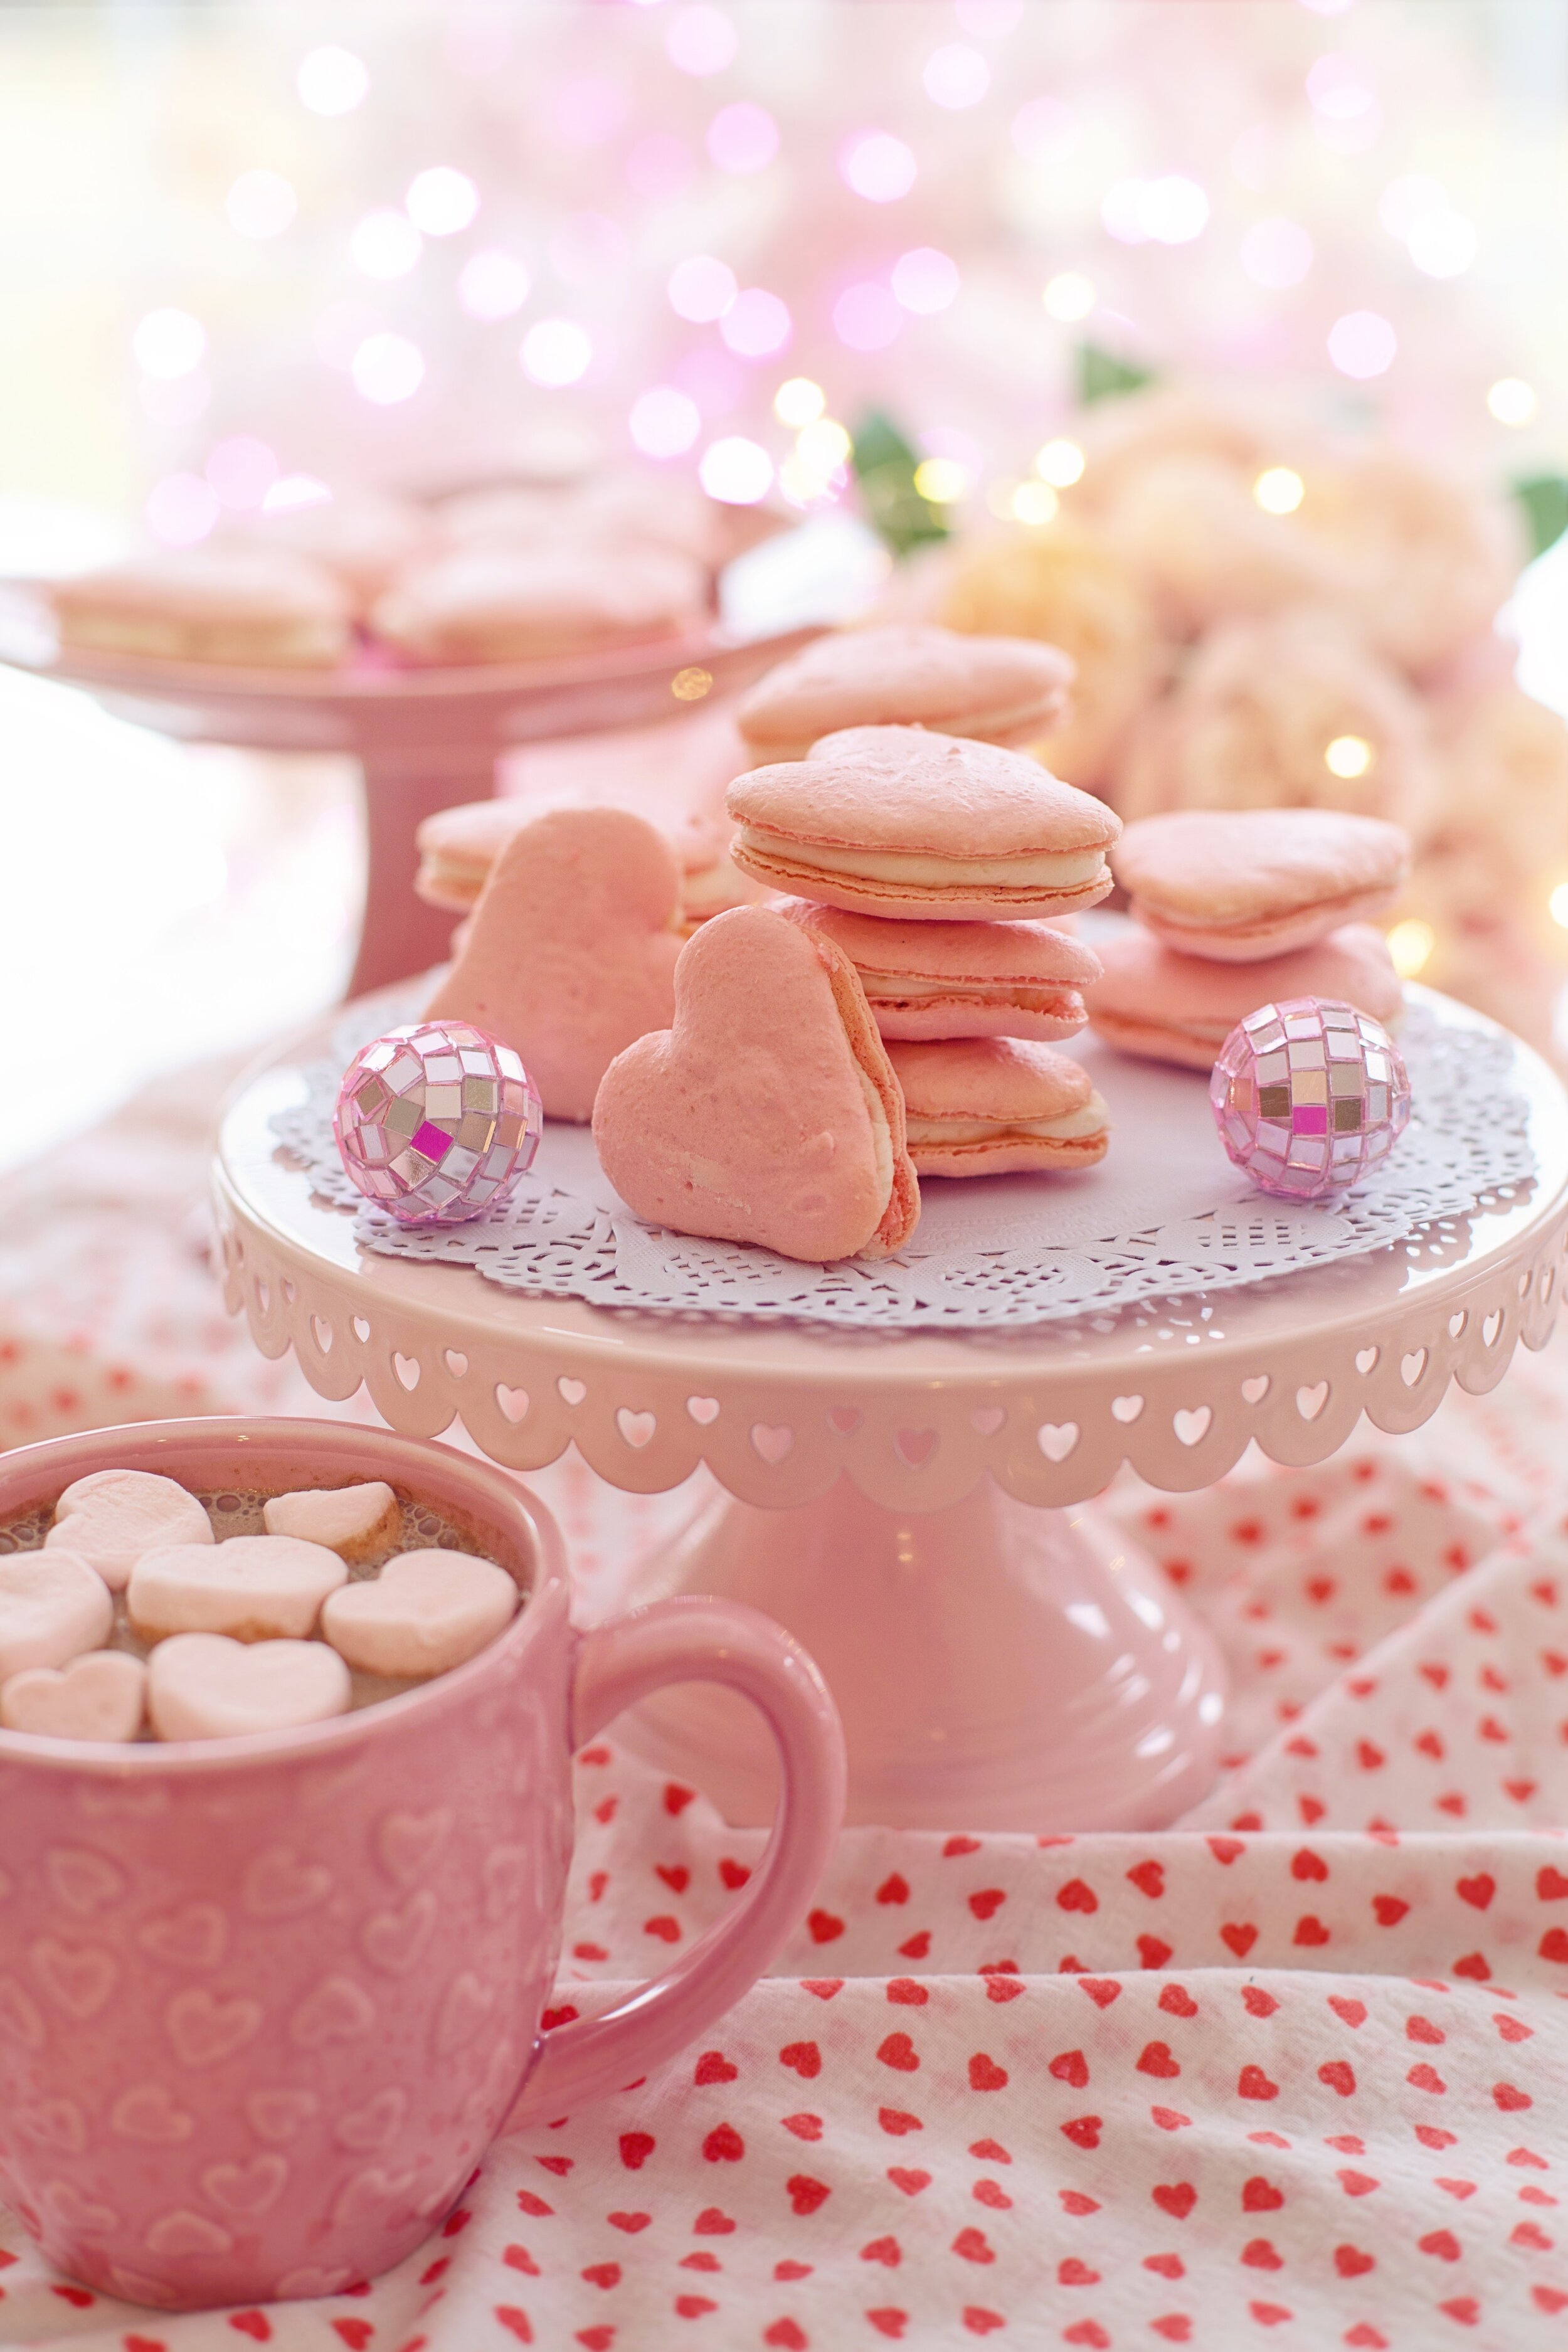 baked-heart-shape-cookies-3553704.jpg